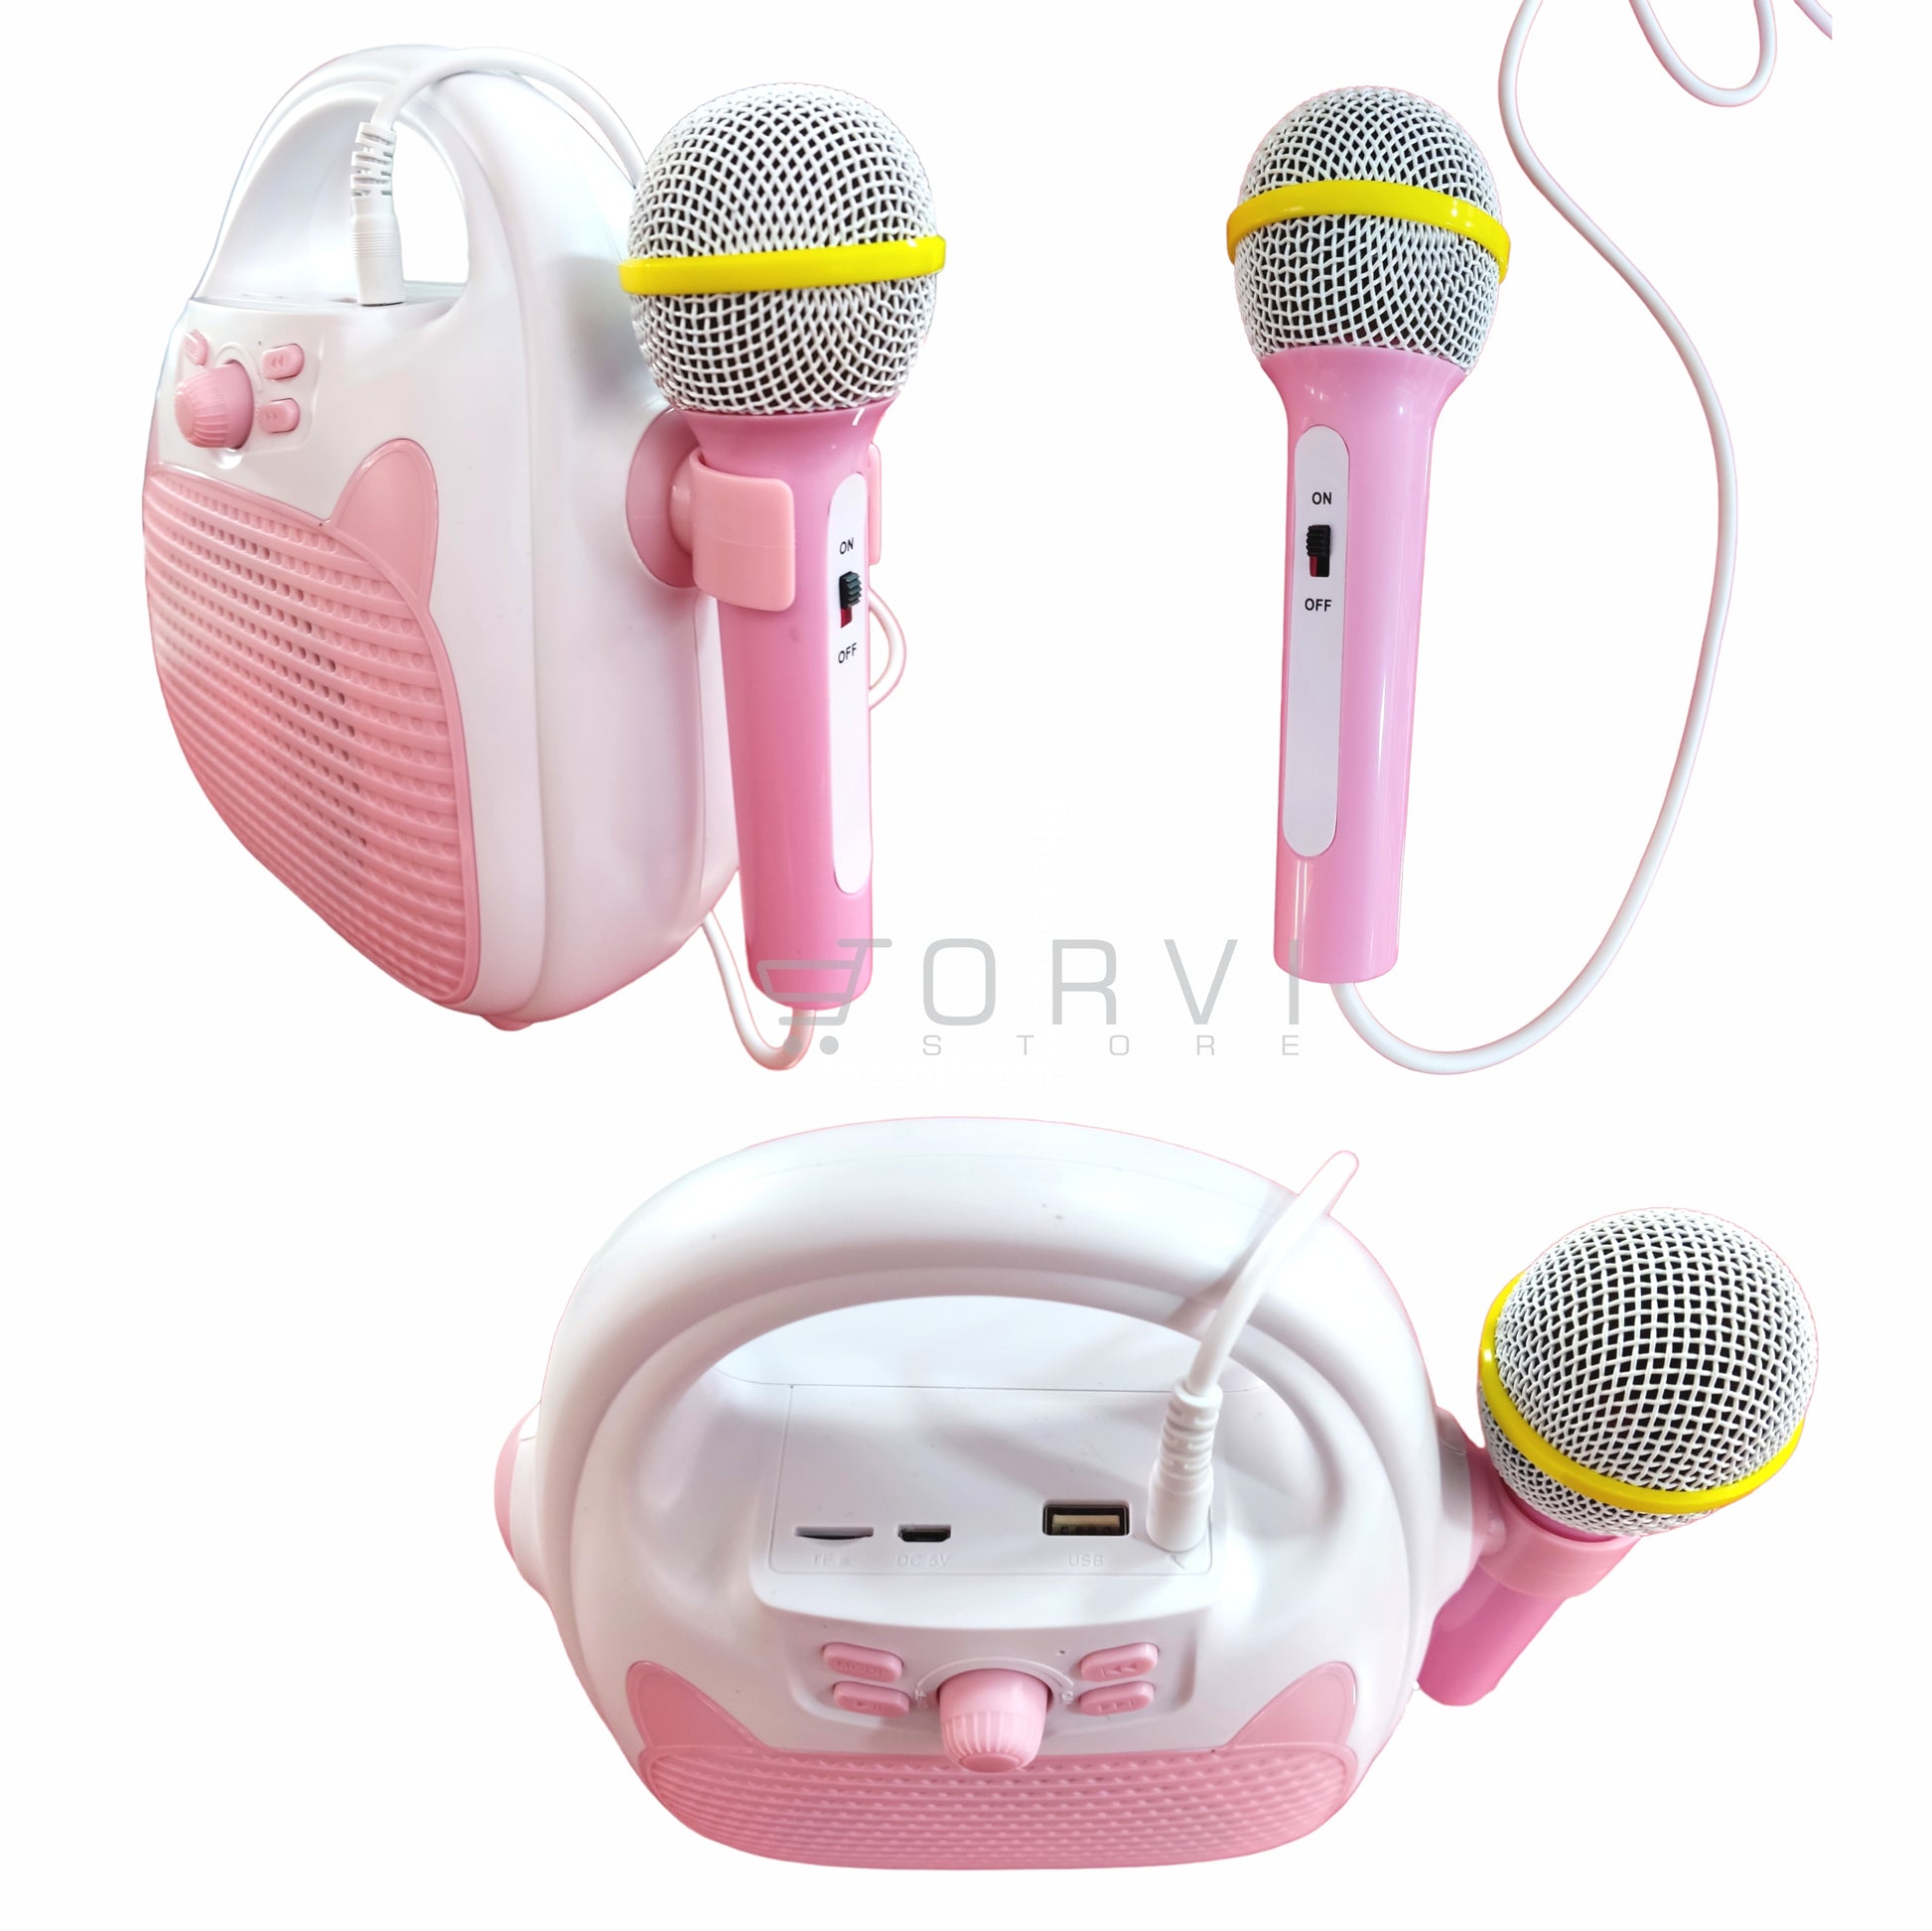 Maquina De Karaoke Rosa Con Microfono Juguetes Musicales Para Niñas 5 6 7 8  Años